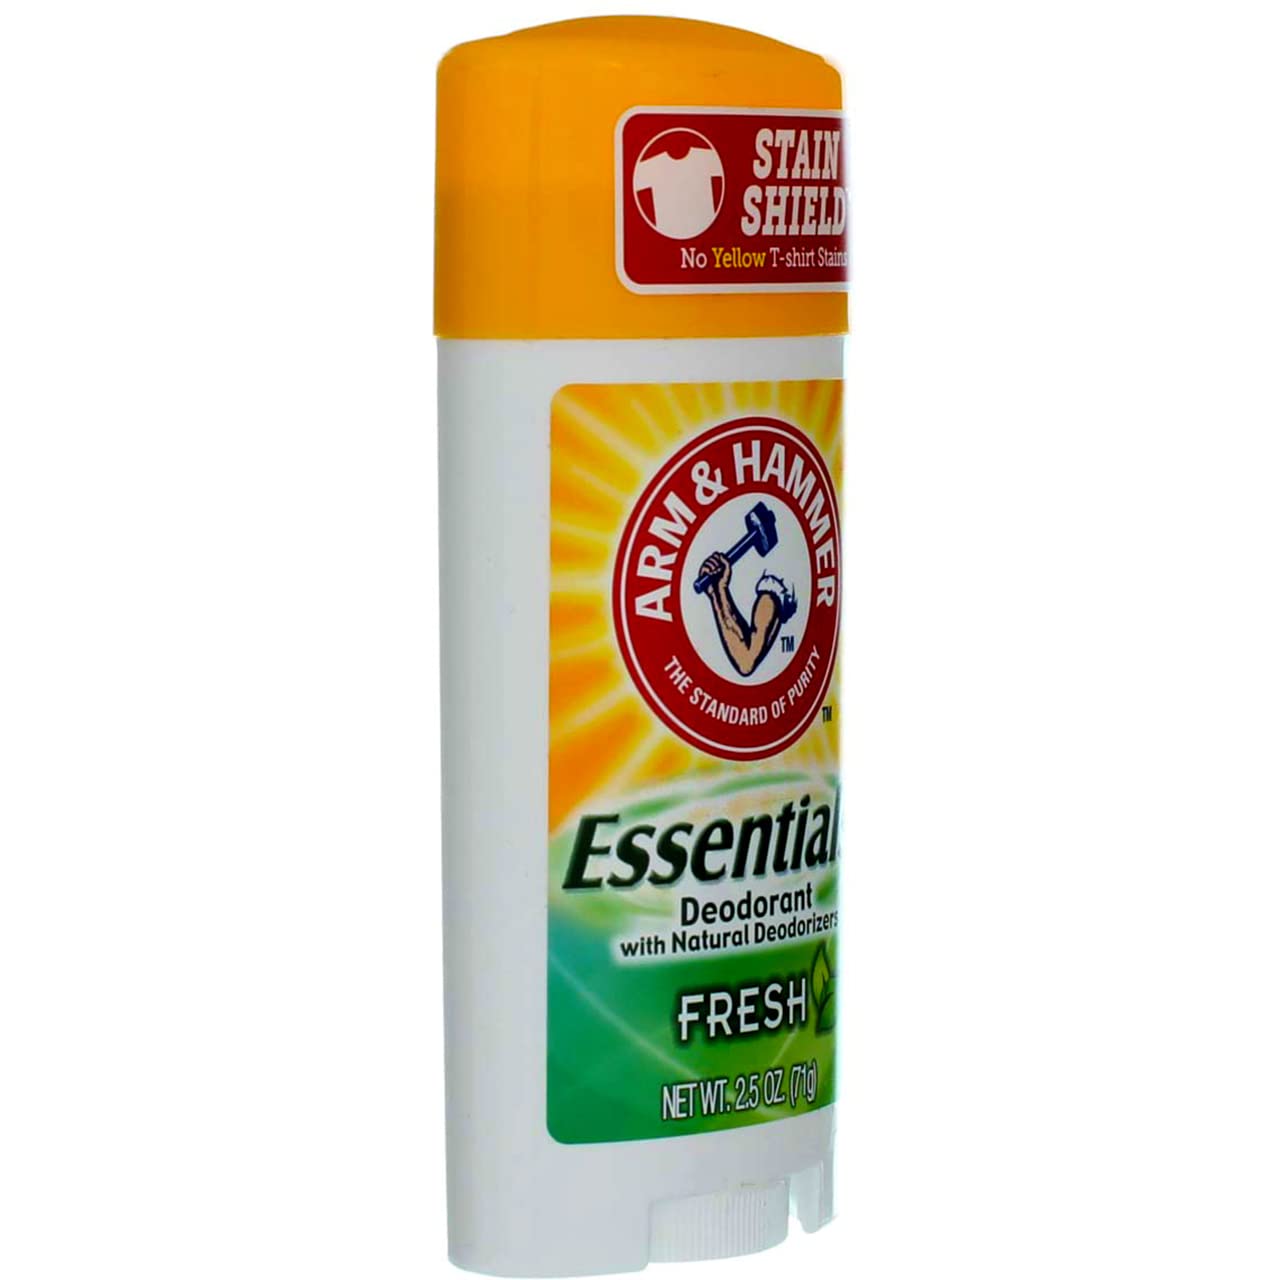 ARM & HAMMER Essentials Deodorant Fresh Rosemary Lavender 2.50 oz (Pack of 3)